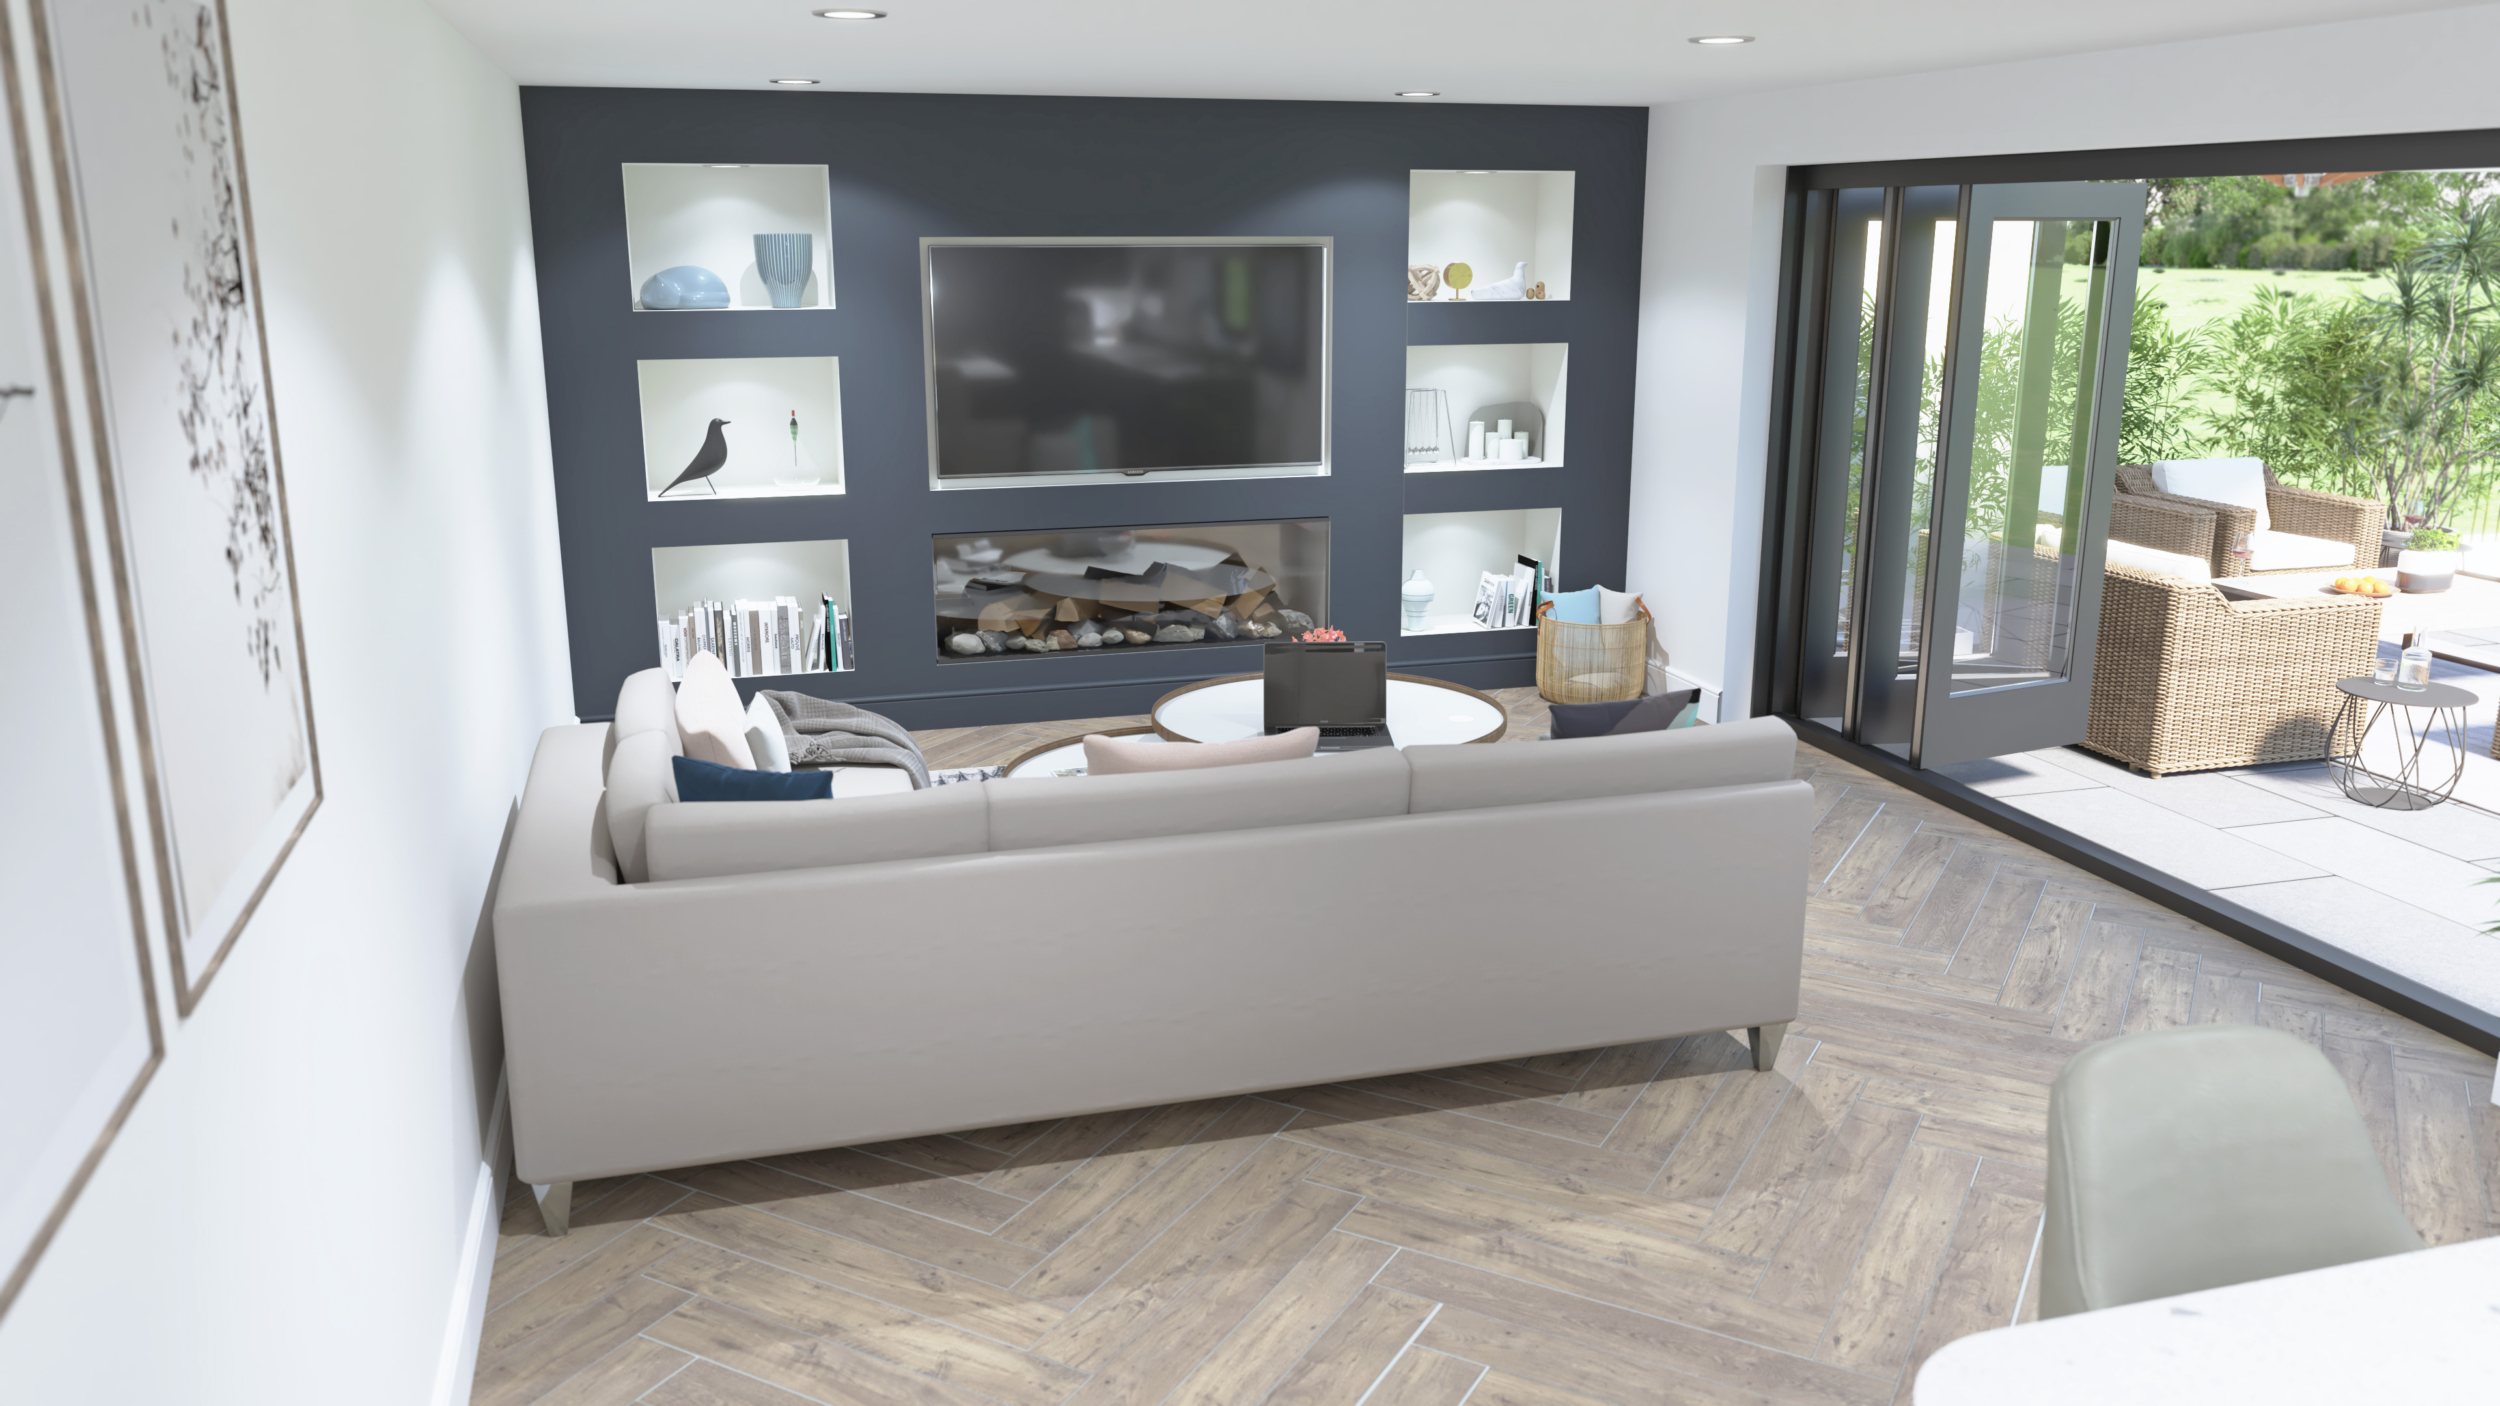 CGI by Linear CGI Studio. The Stables Property Development, Preston, Lancashire. living room CGI